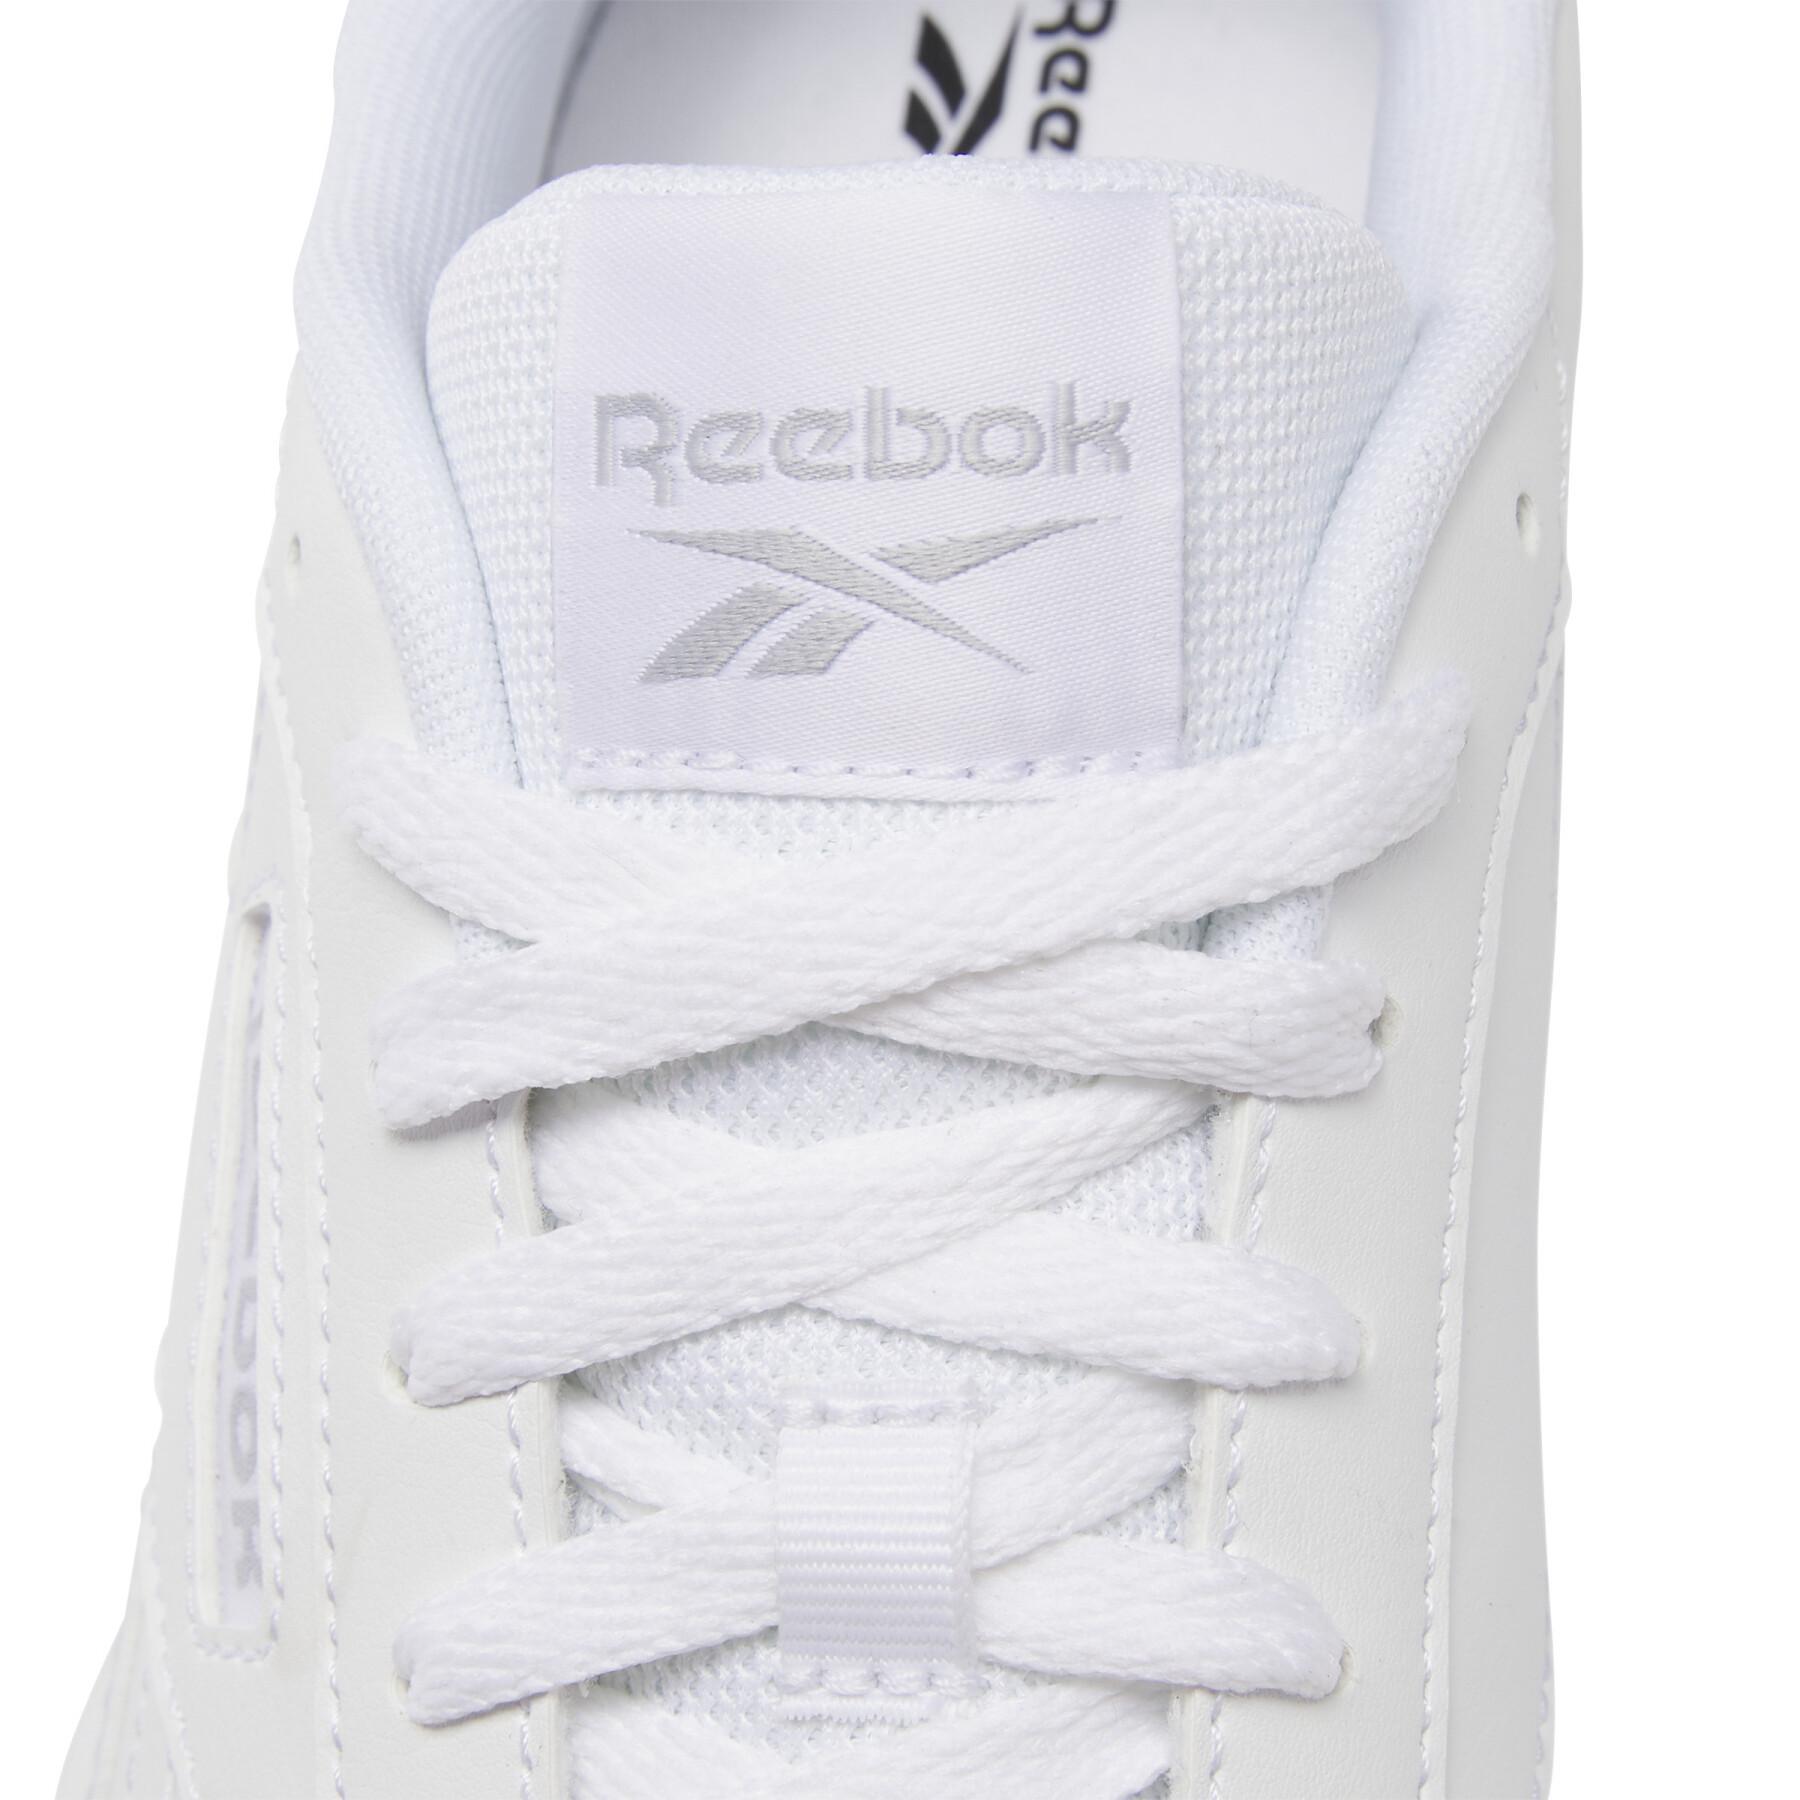 Sneakers Reebok Court Advance